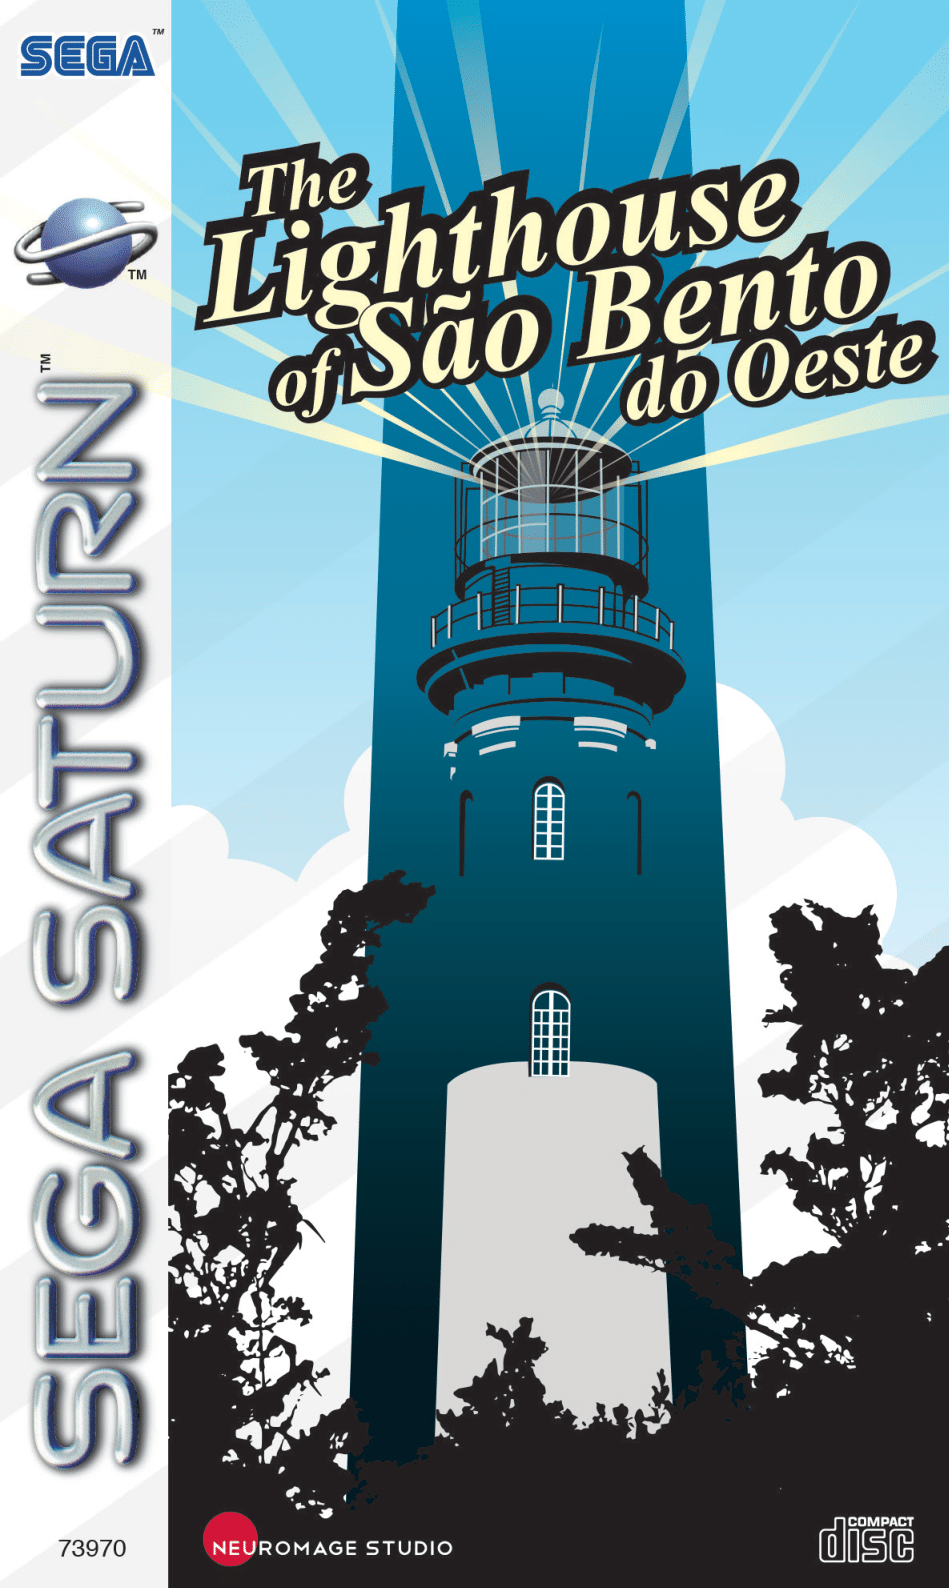 The Lighthouse of Sao Bento do Oeste